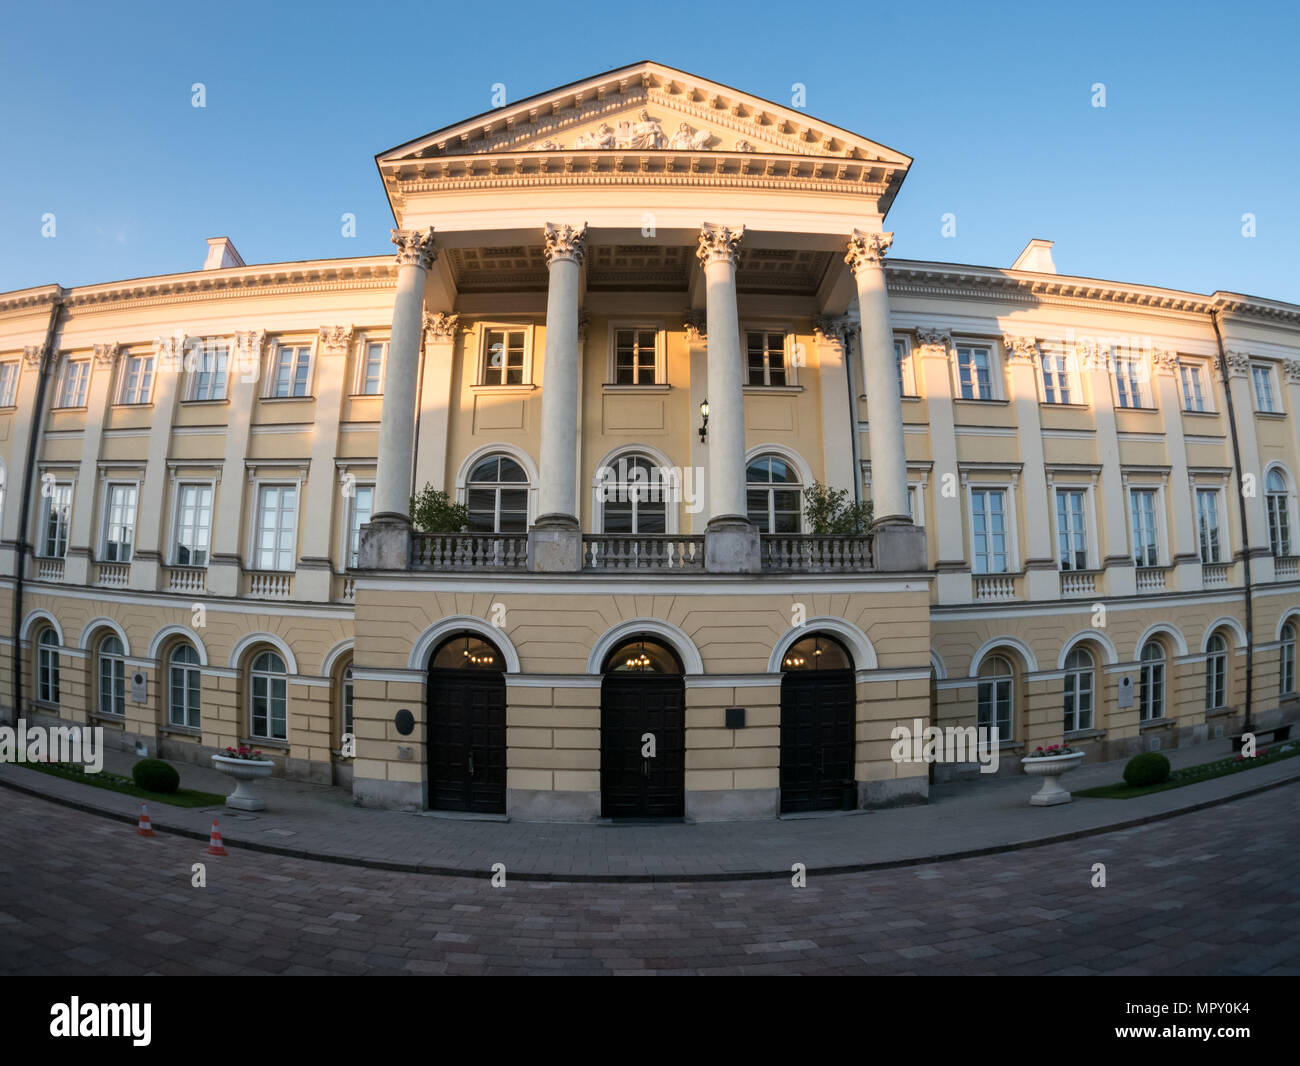 Pałac Kazimierzowski (Kazimierz Palace), University of Warsaw, Poland Stock Photo